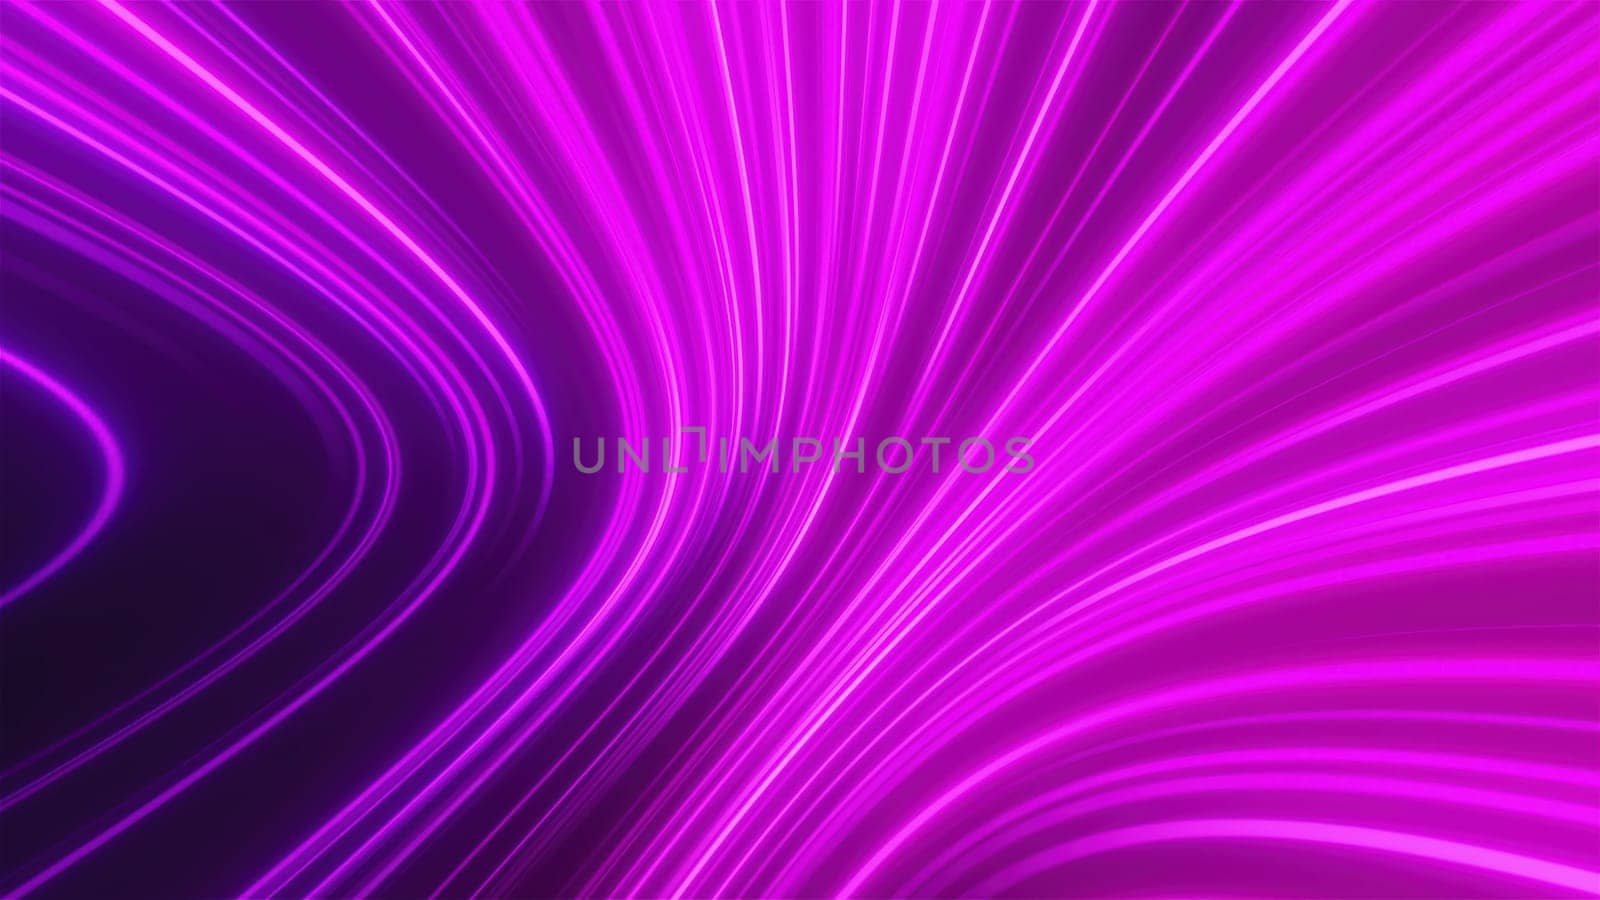 Stream neon lines. Computer generated 3d render